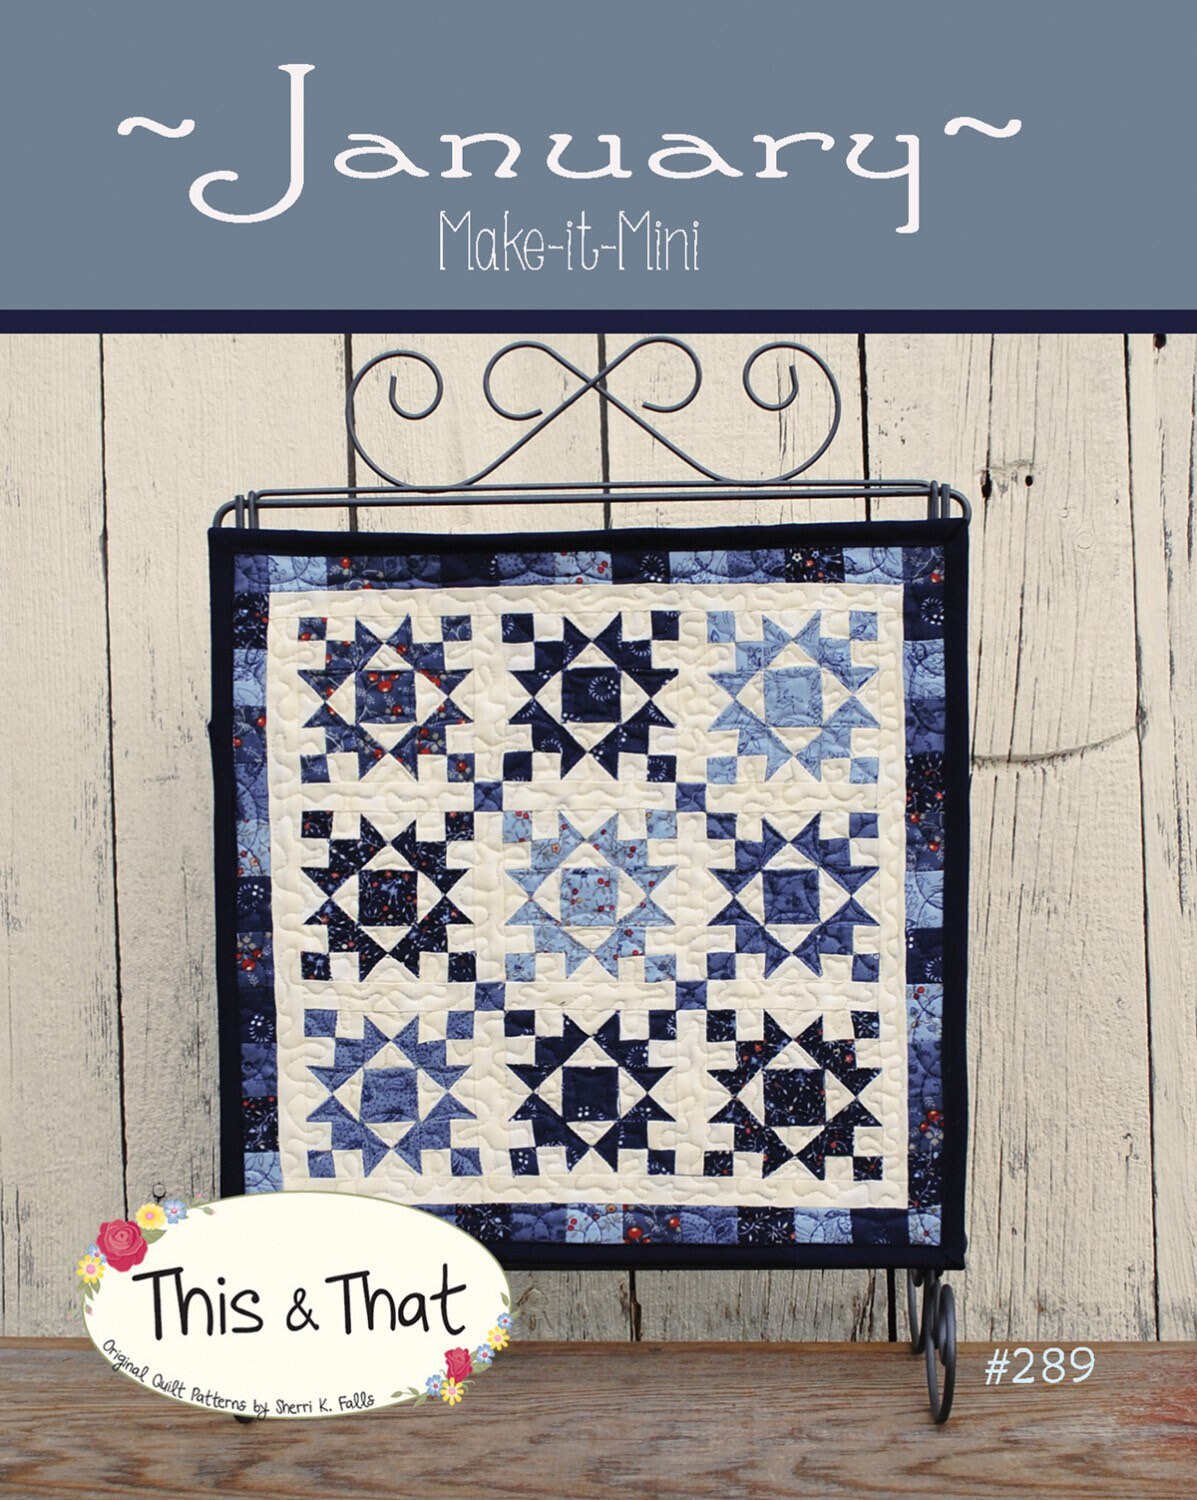 Make It Mini January Quilt Pattern - This & That - Sherri Falls